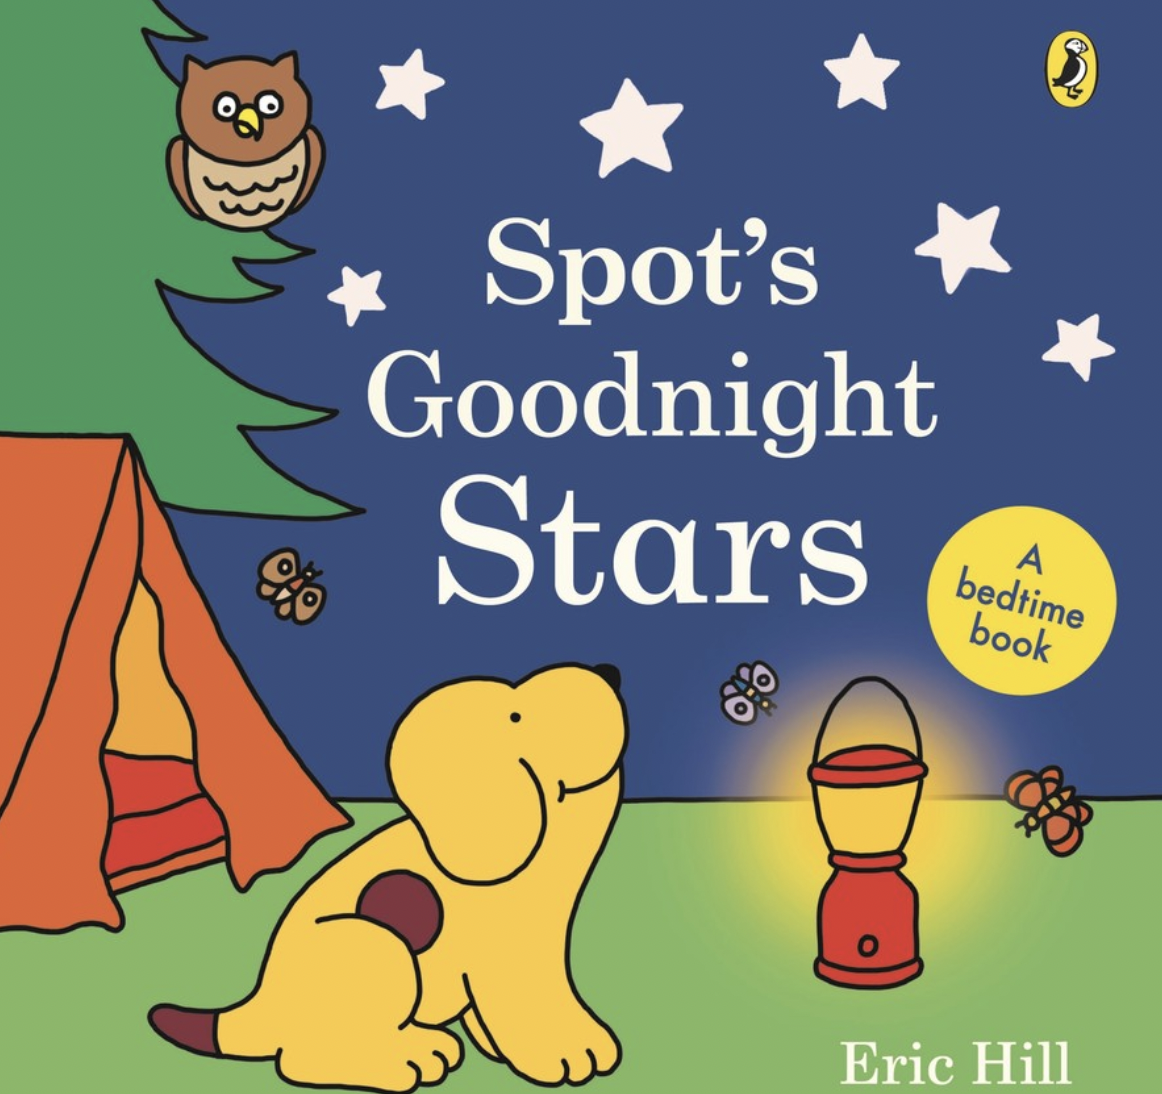 Spot's Goodnight Stars by Eric Hill